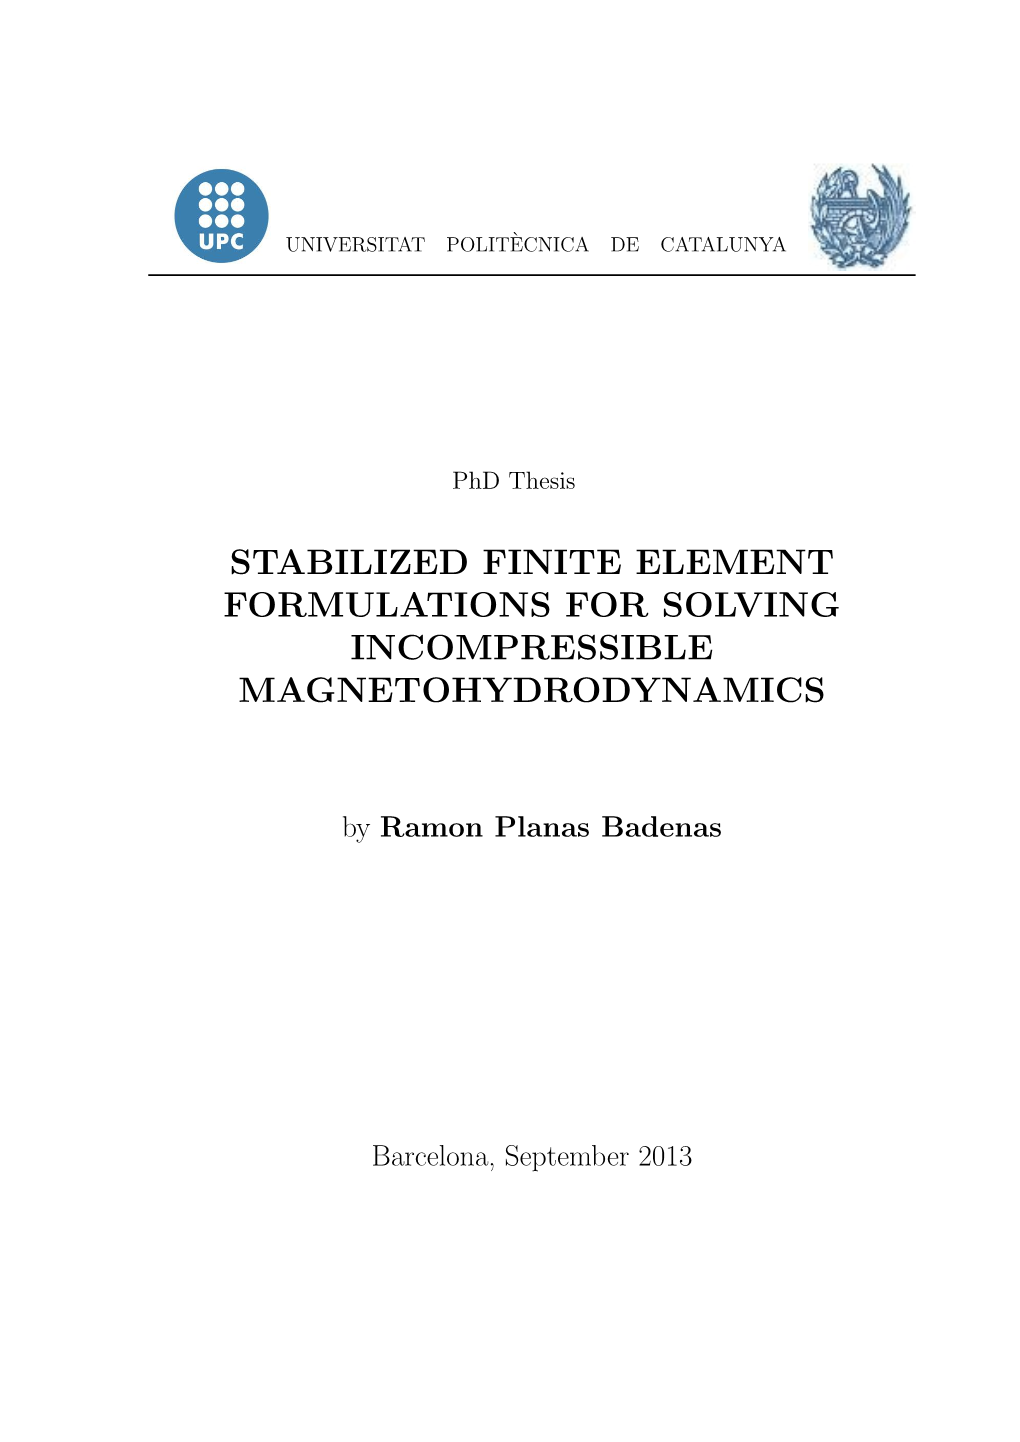 Stabilized Finite Element Formulations for Solving Incompressible Magnetohydrodynamics